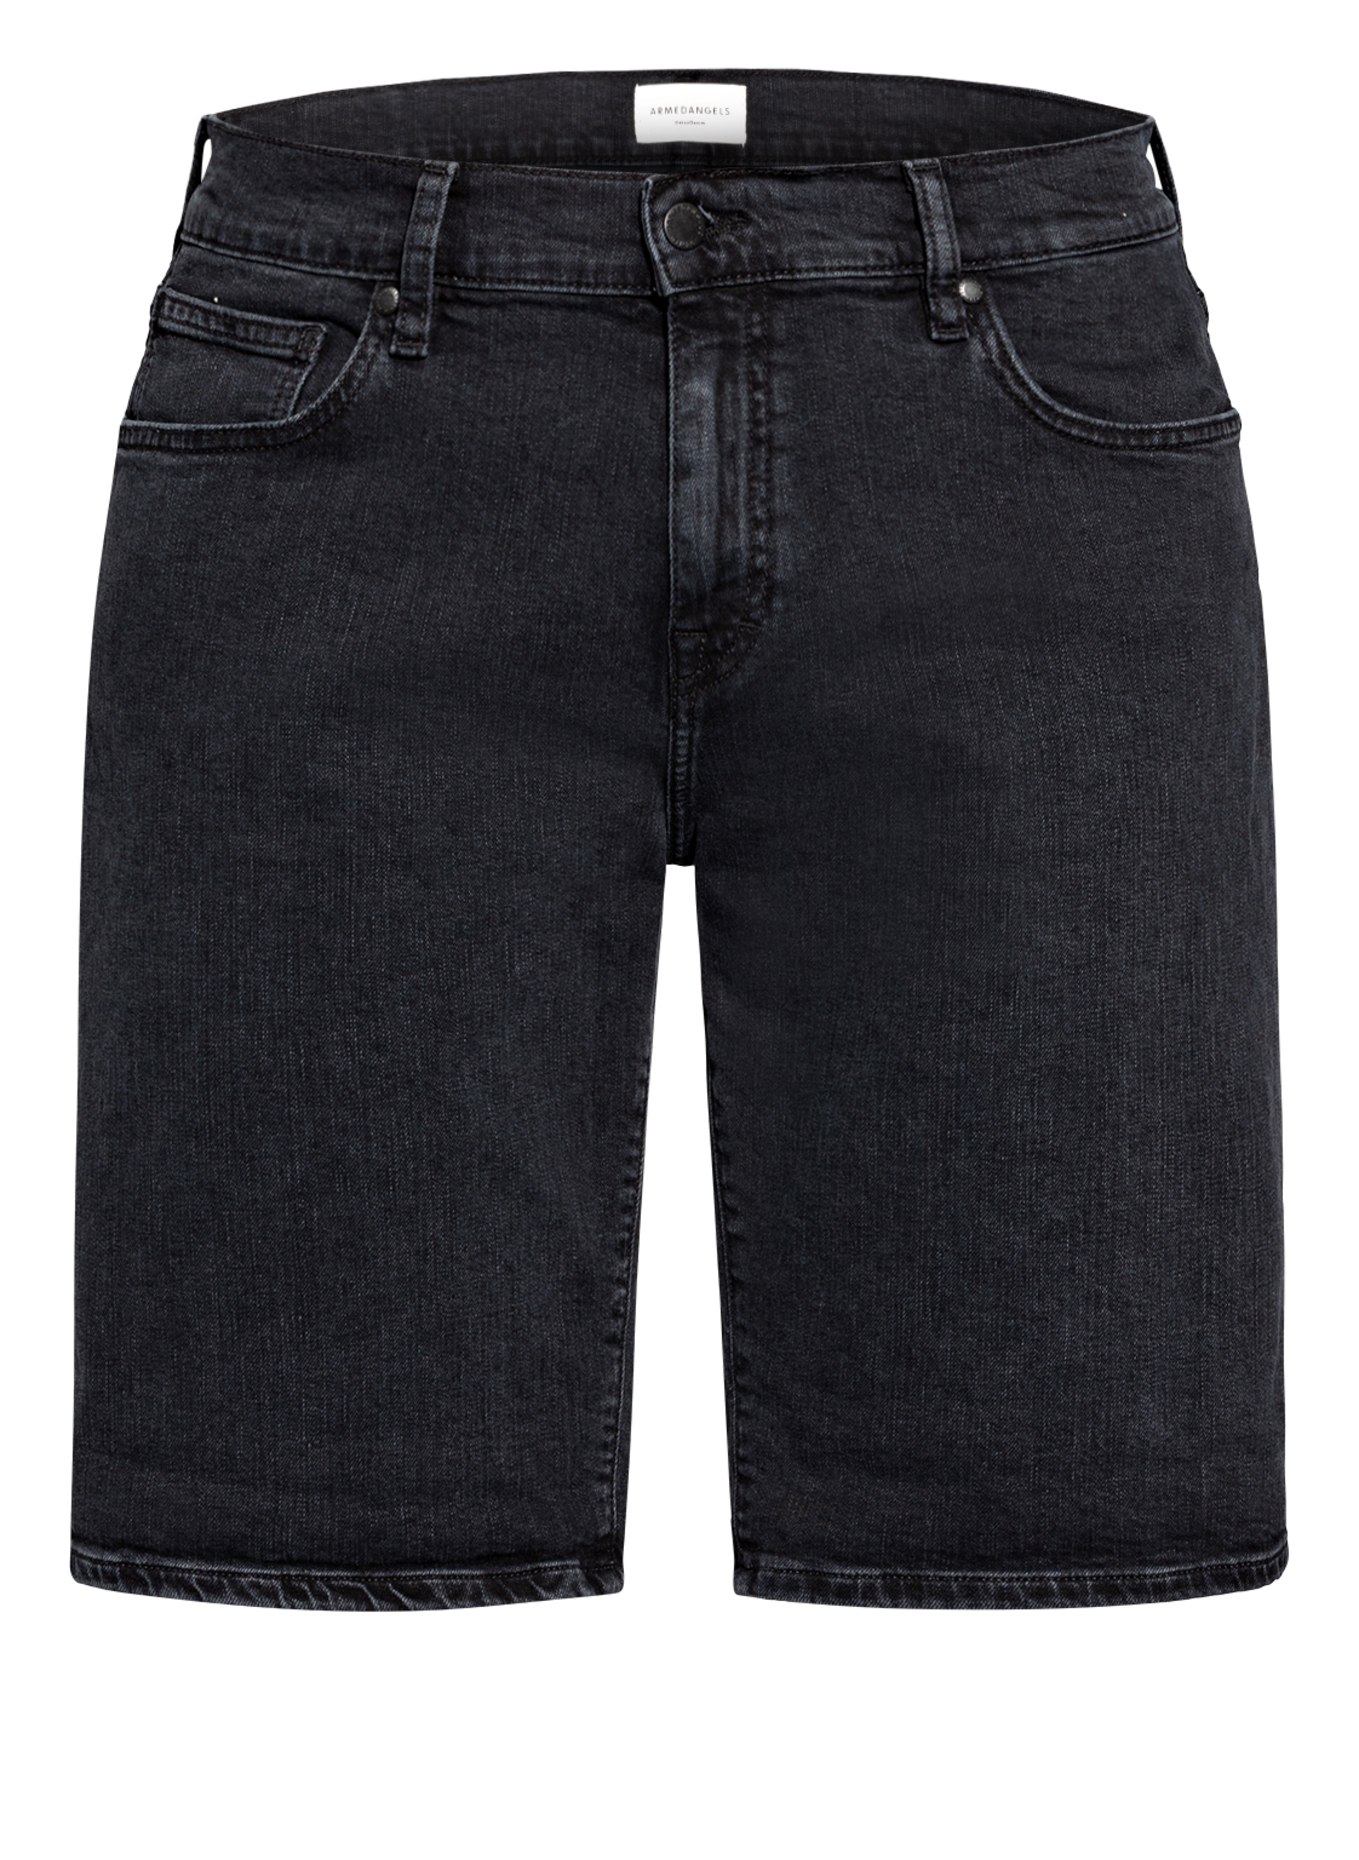 ARMEDANGELS Jeansshorts NAIL Slim Fit, Farbe: 472 washed down black (Bild 1)